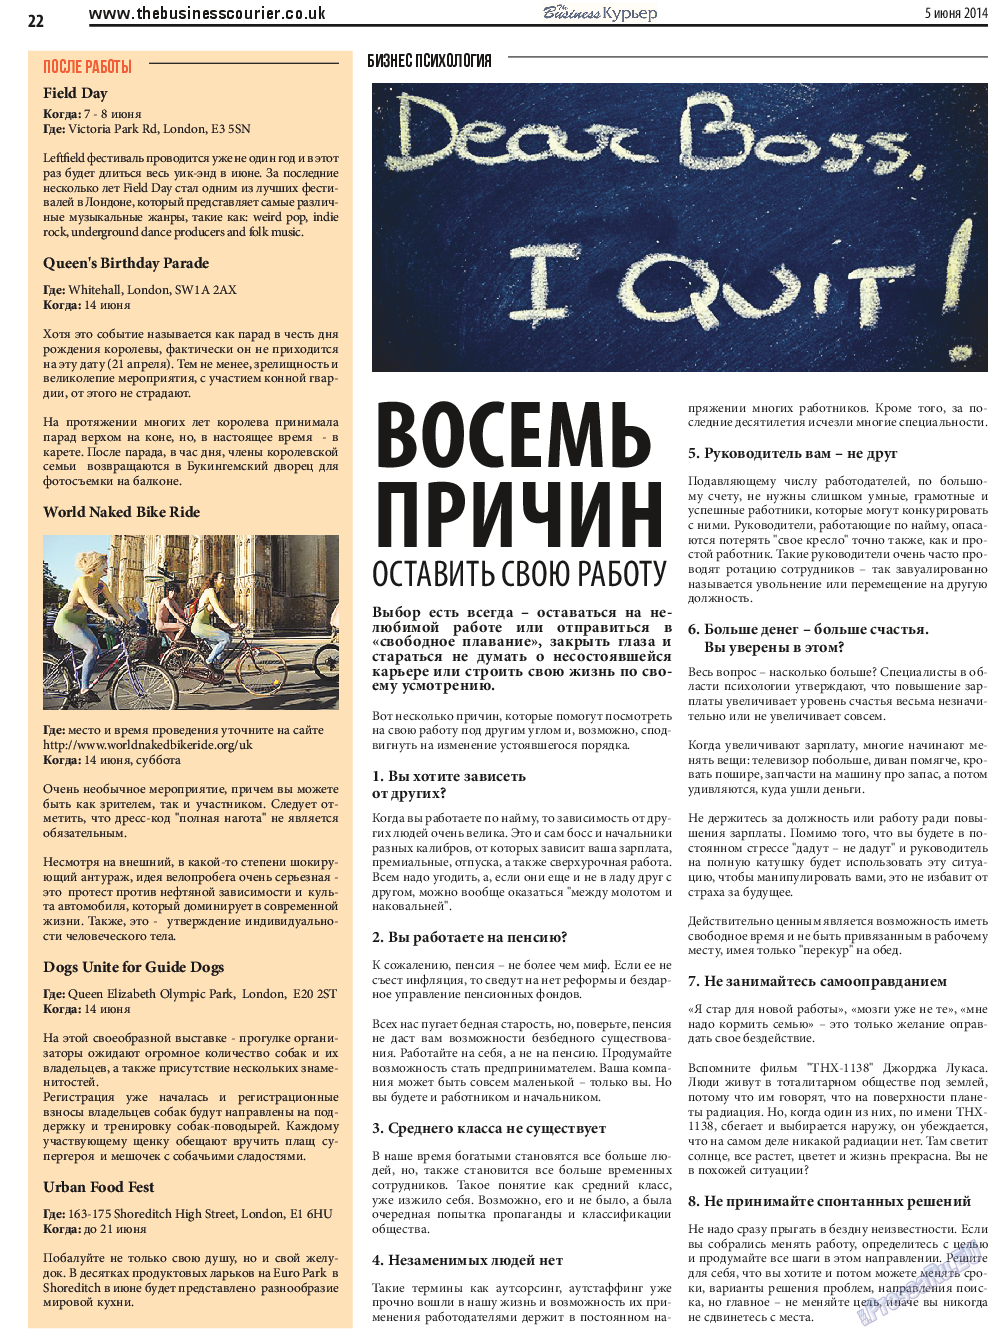 The Business Курьер, газета. 2014 №24 стр.22